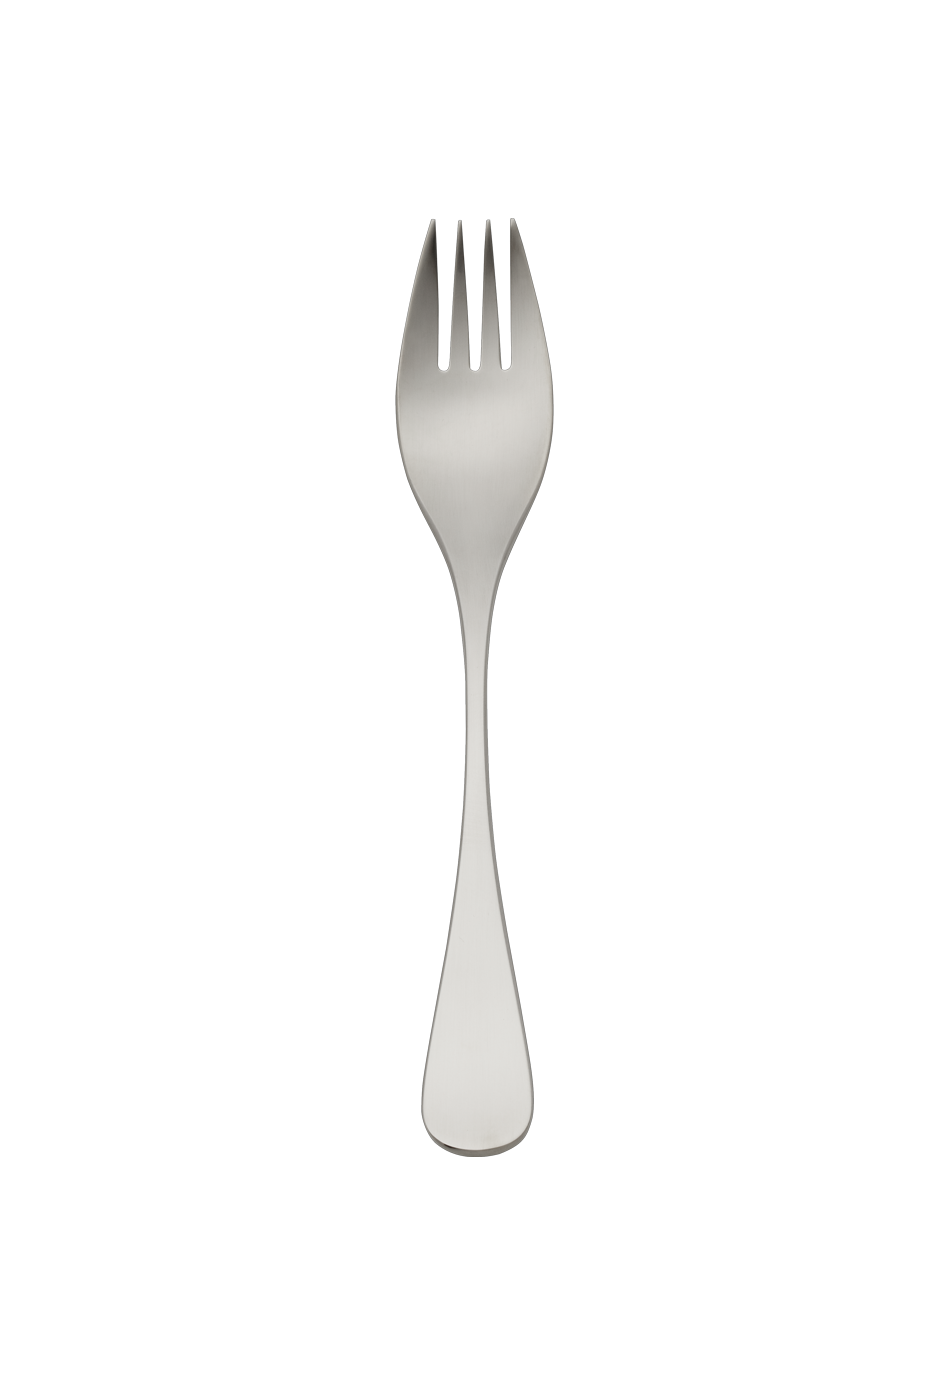 Scandia Menu Fork (18/8 stainless steel)